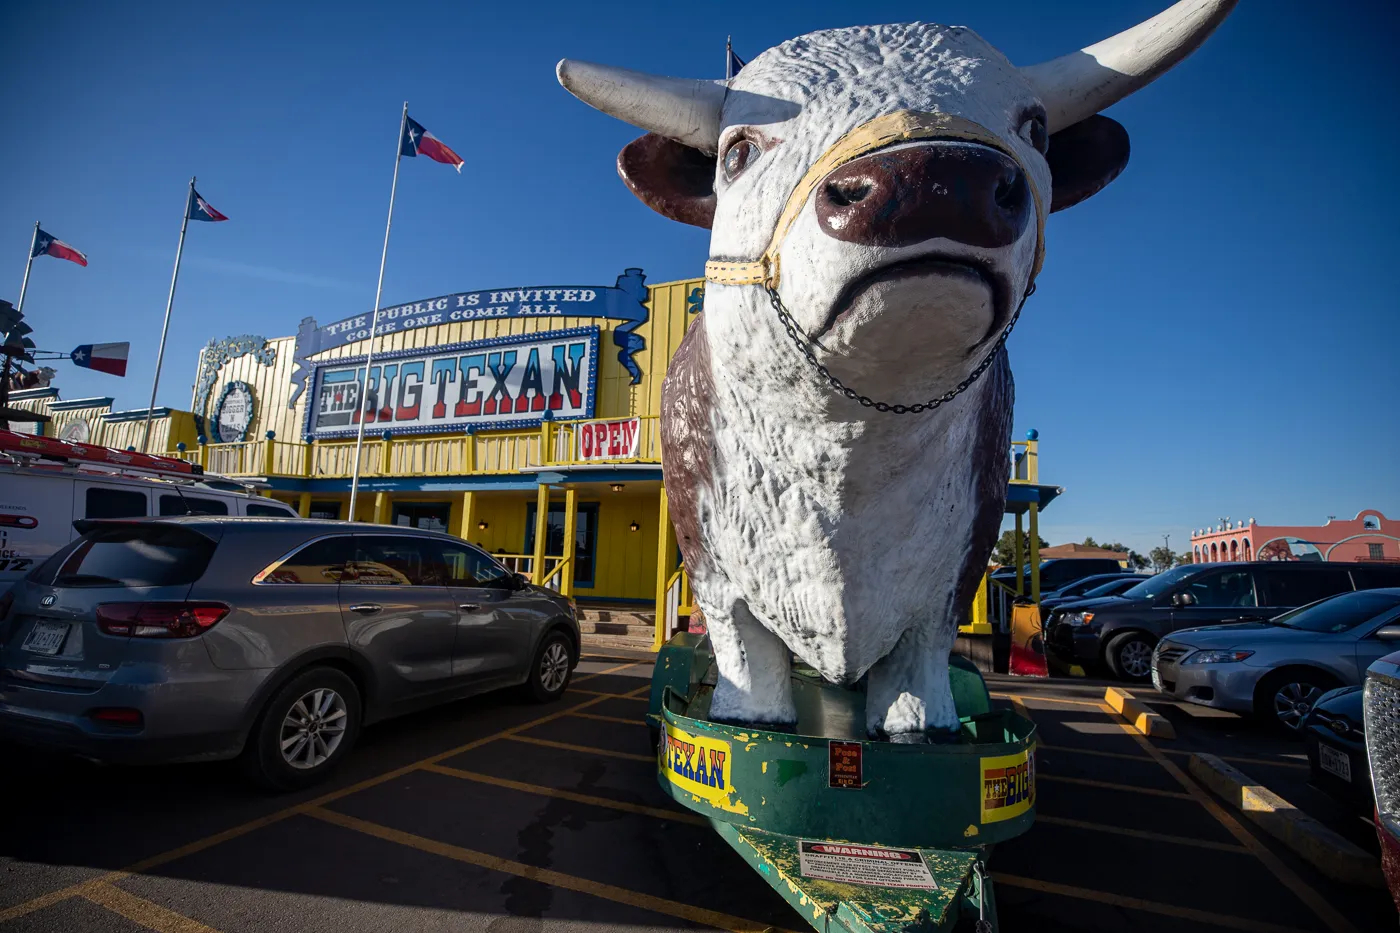 Big steer at the The Big Texan Steak Ranch in Amarillo, Texas